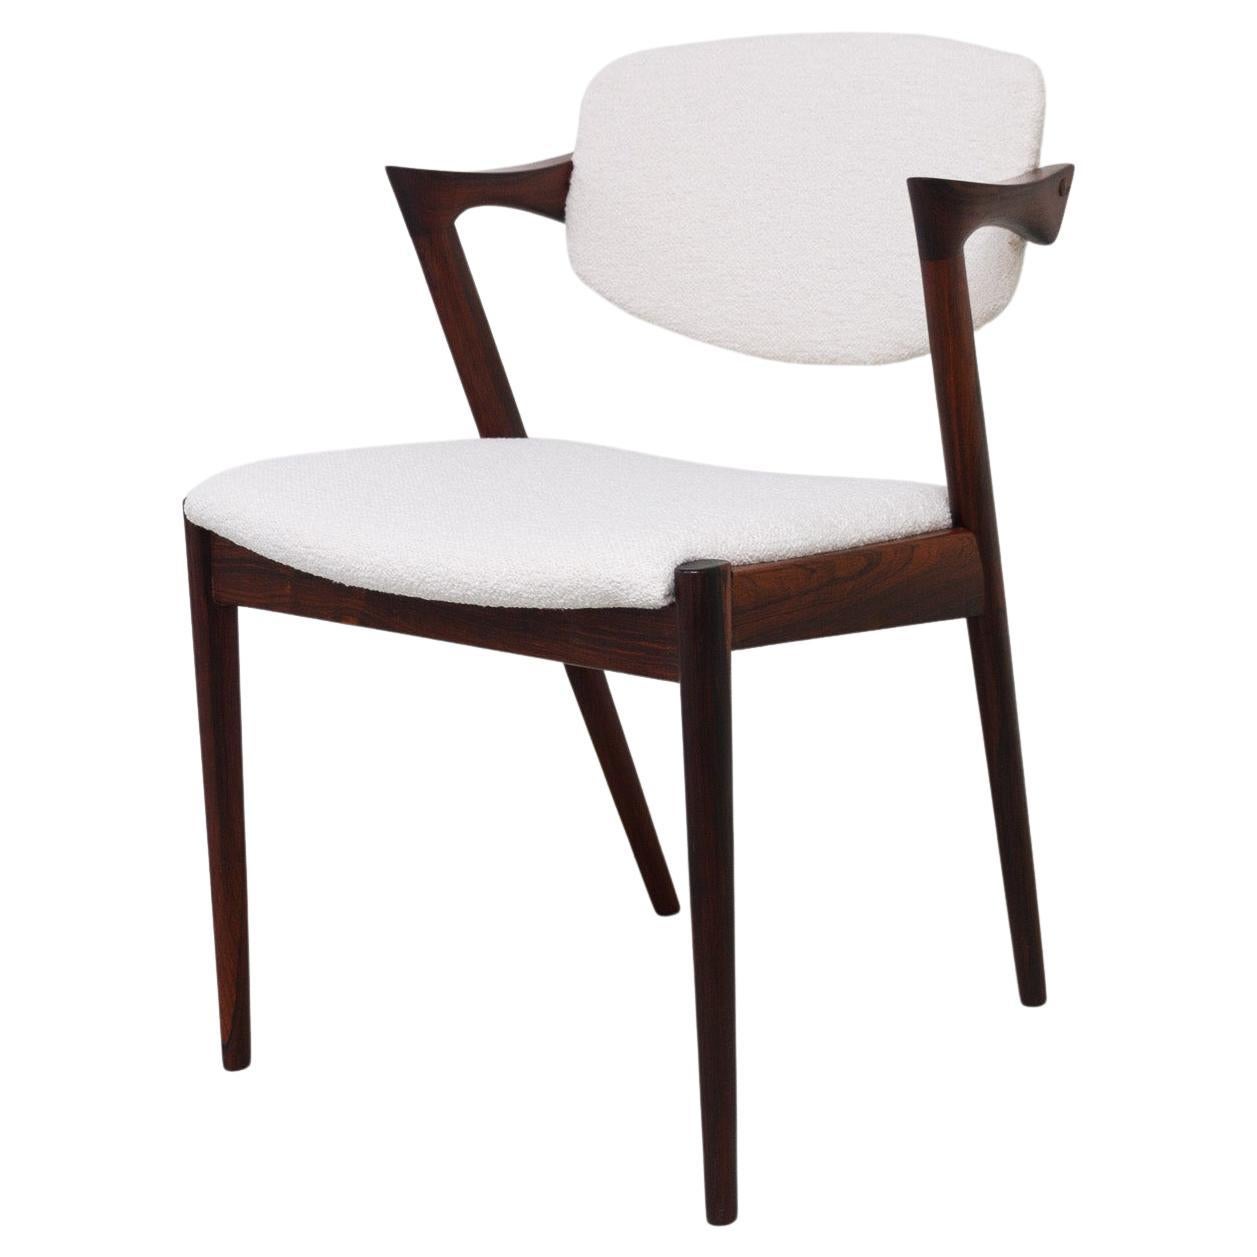 Vintage Danish Modern Rosewood Chair Model 42 by Kai Kristiansen, 1960s For Sale